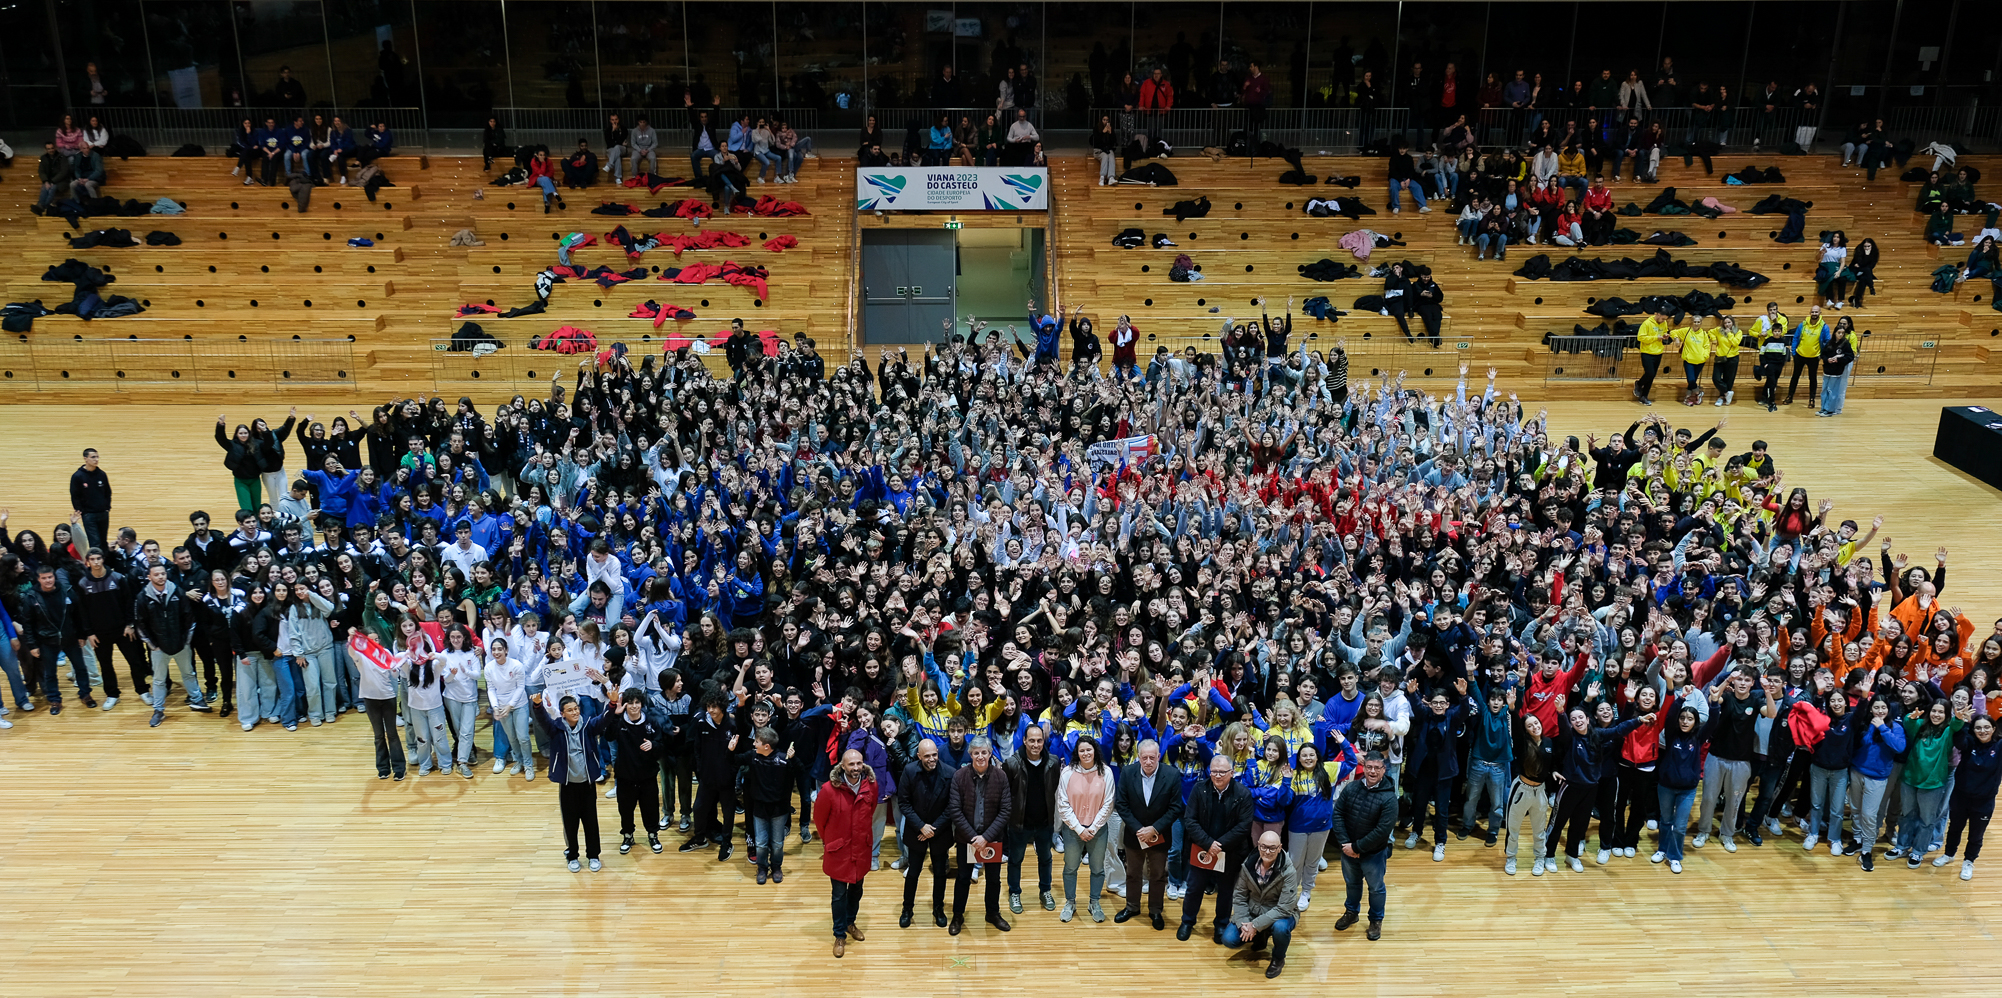 11º Viana Volley Cup traz a Viana do Castelo 1.300 atletas de todo o país e de Espanha